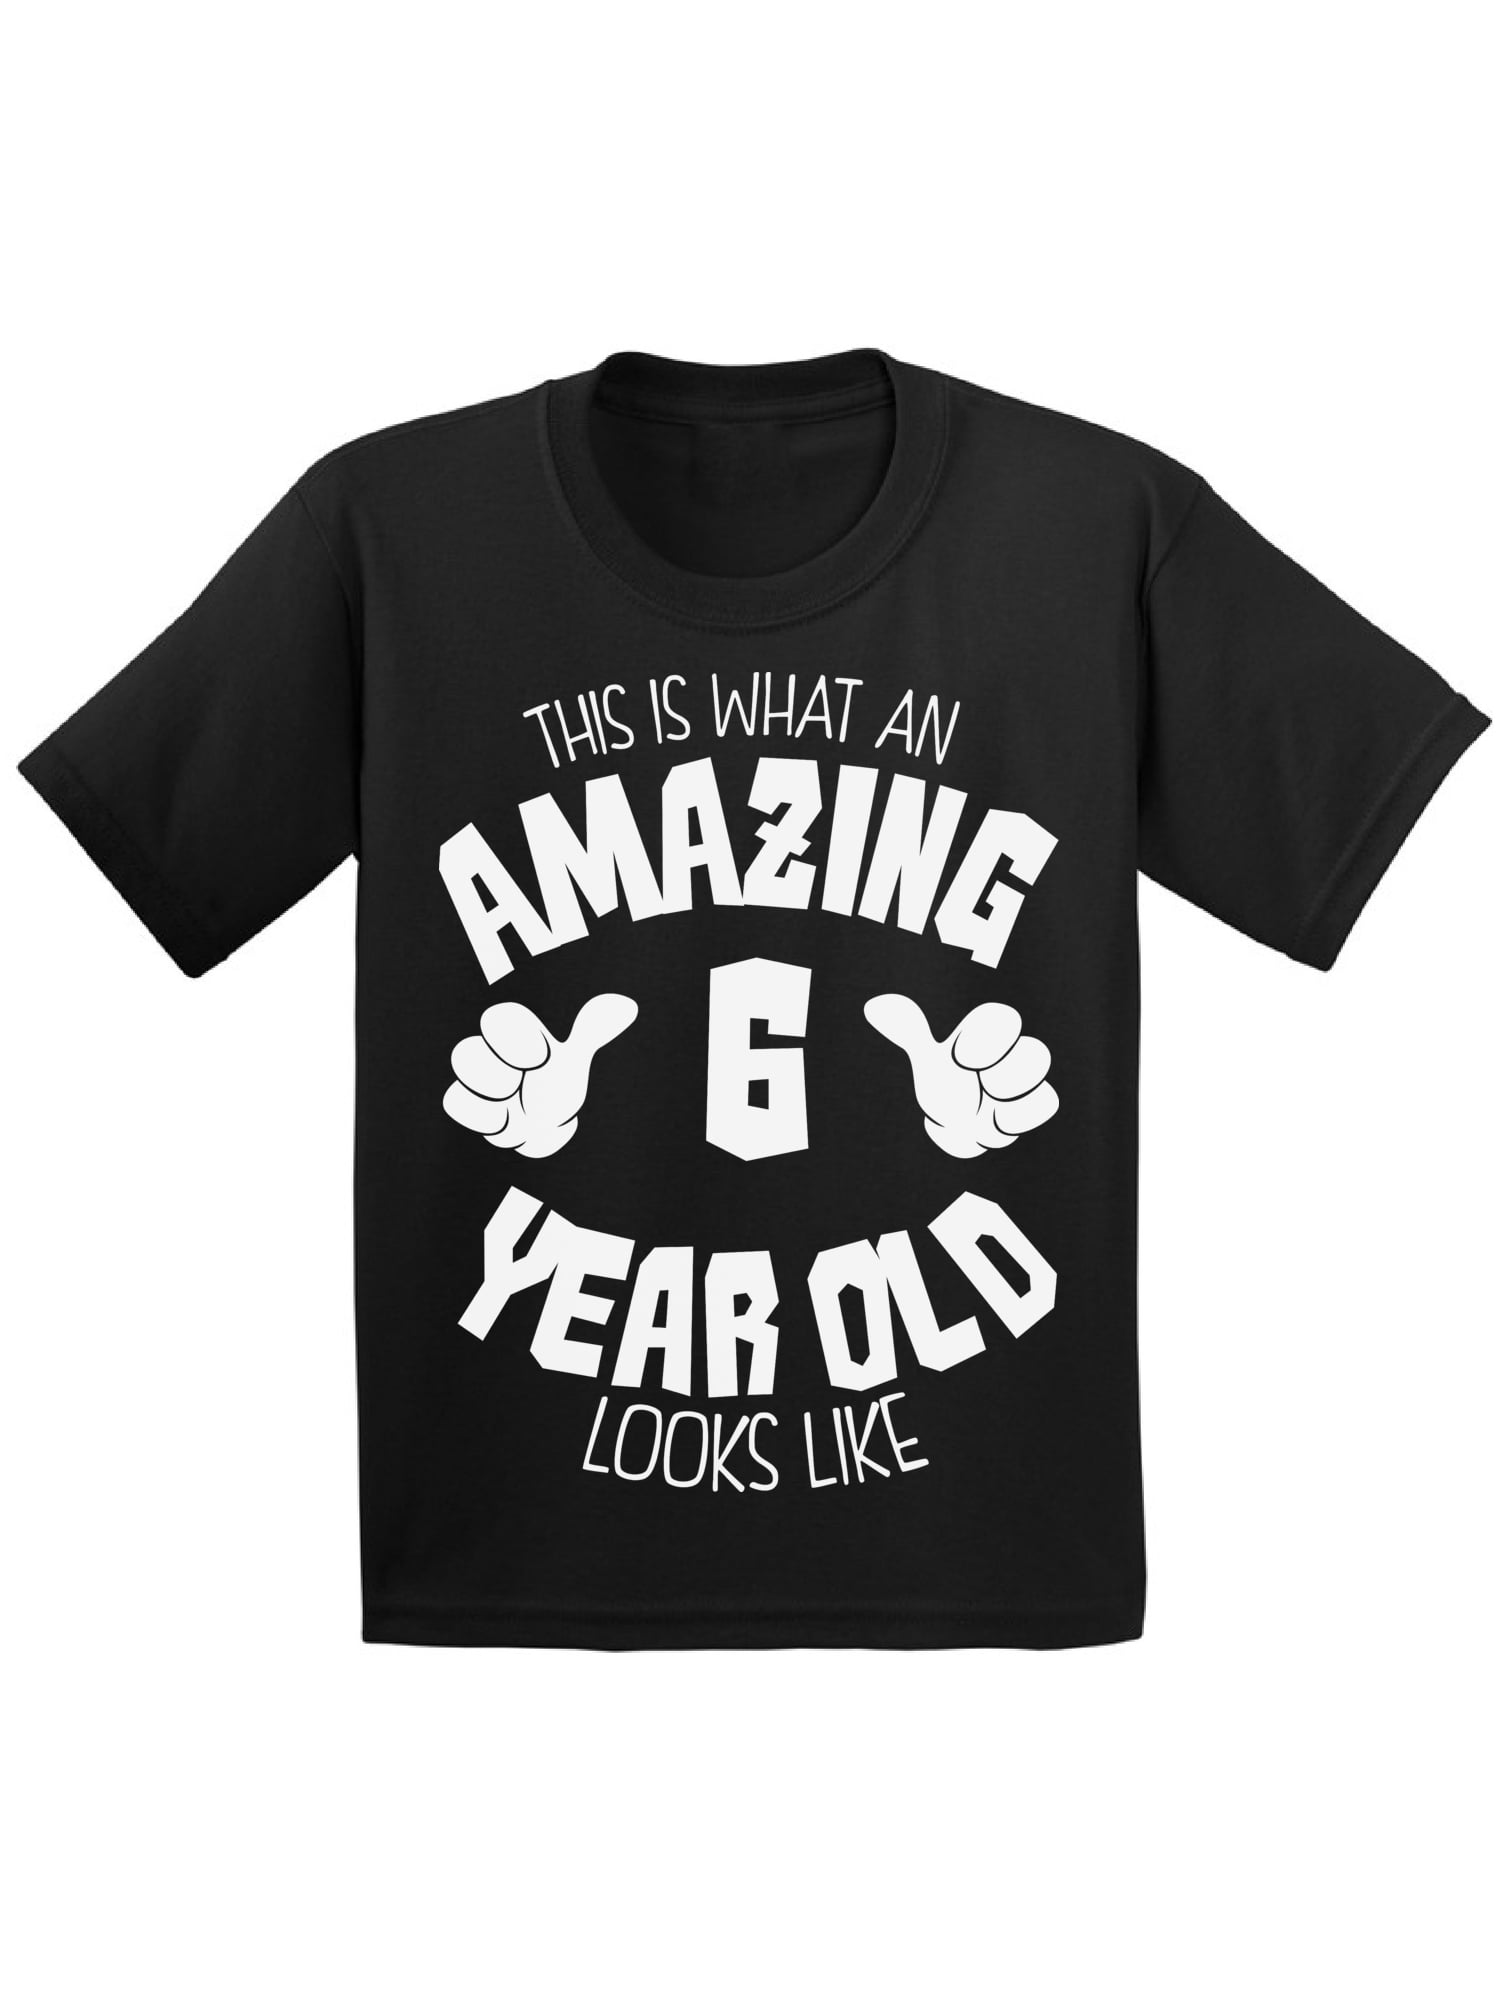 Awesome 6 year old Children Kids t-shirt 6th birthday printed teeshirt 